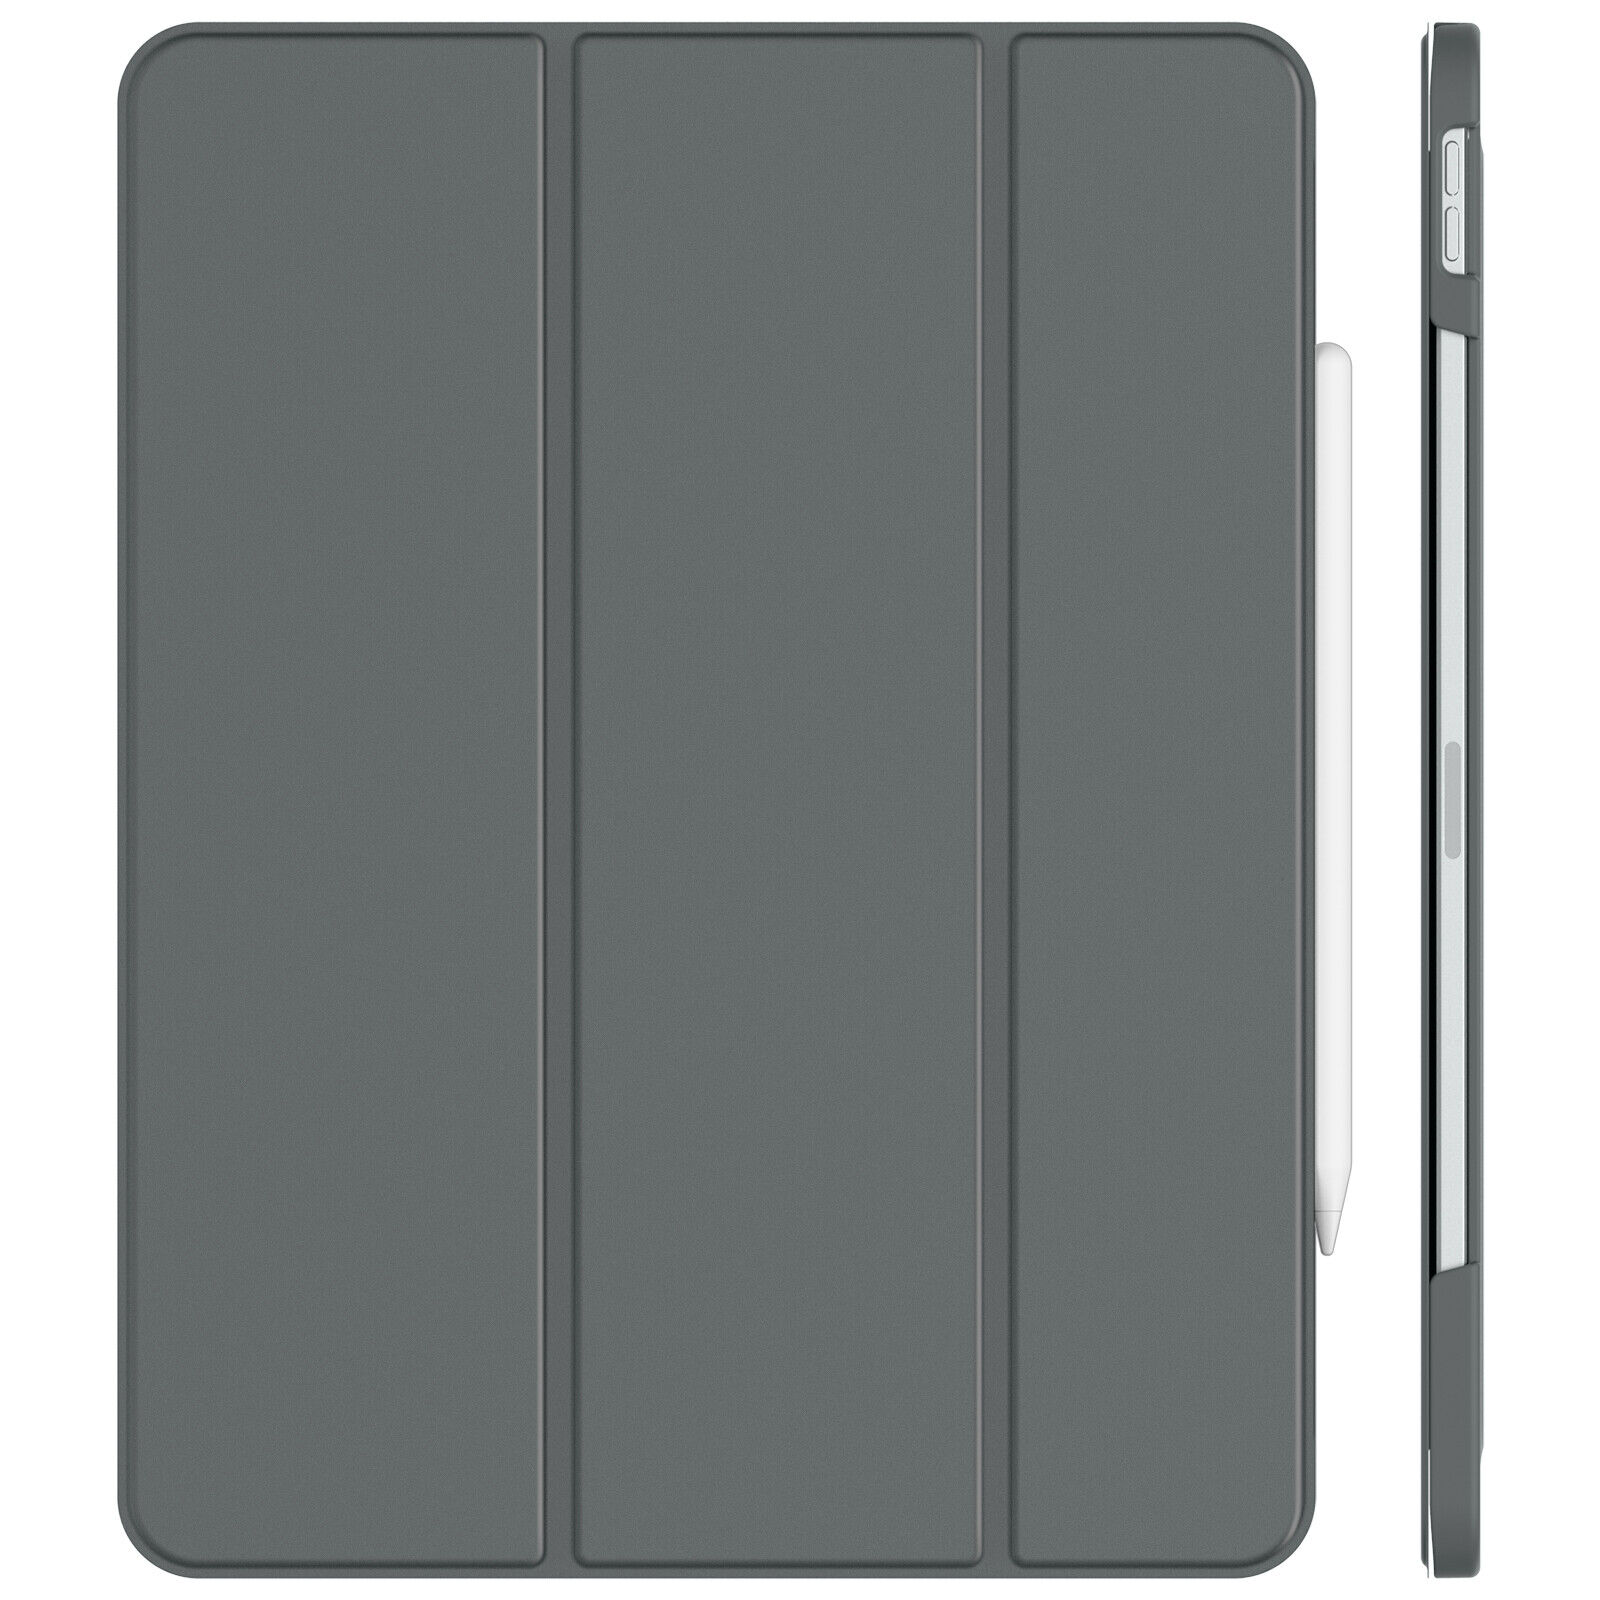 JETech Case for iPad Pro 12.9-Inch 2020/2018 Model 4th/3rd Gen Smart Cover